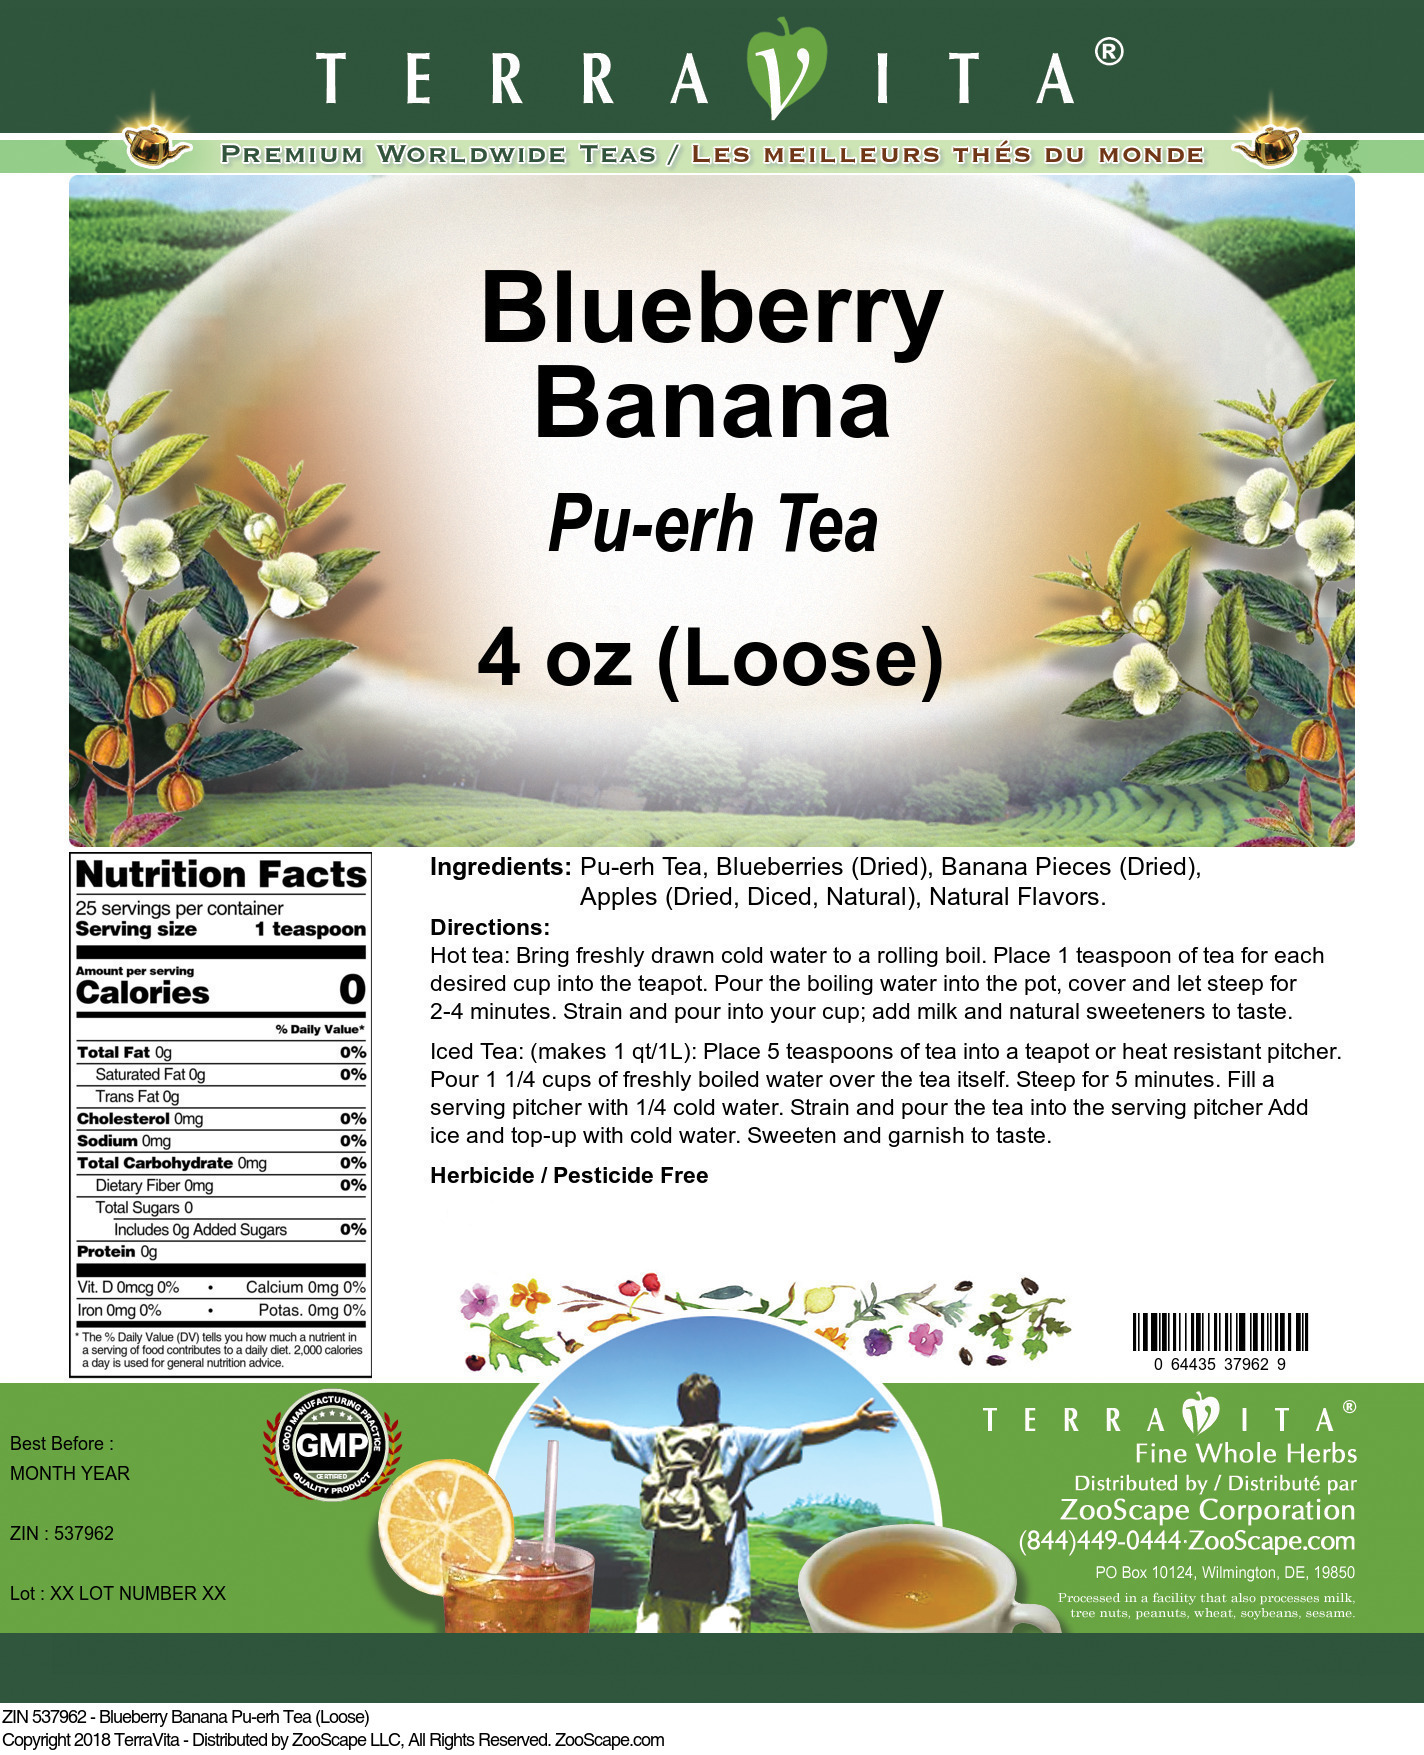 Blueberry Banana Pu-erh Tea (Loose) - Label